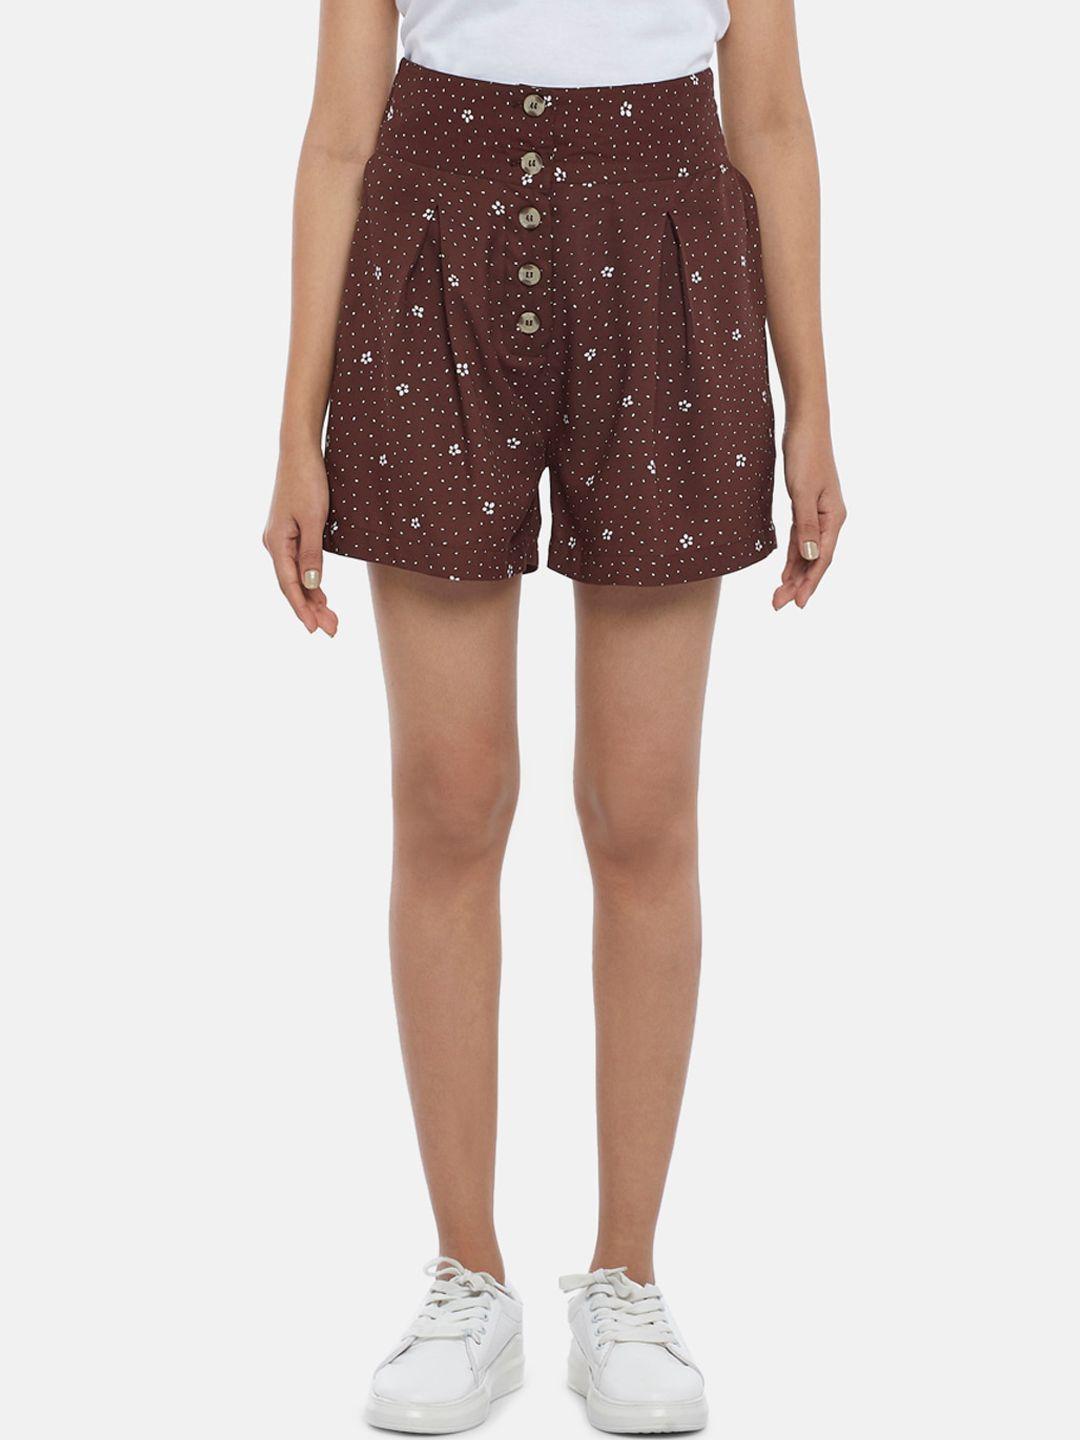 people-women-brown-floral-printed-shorts